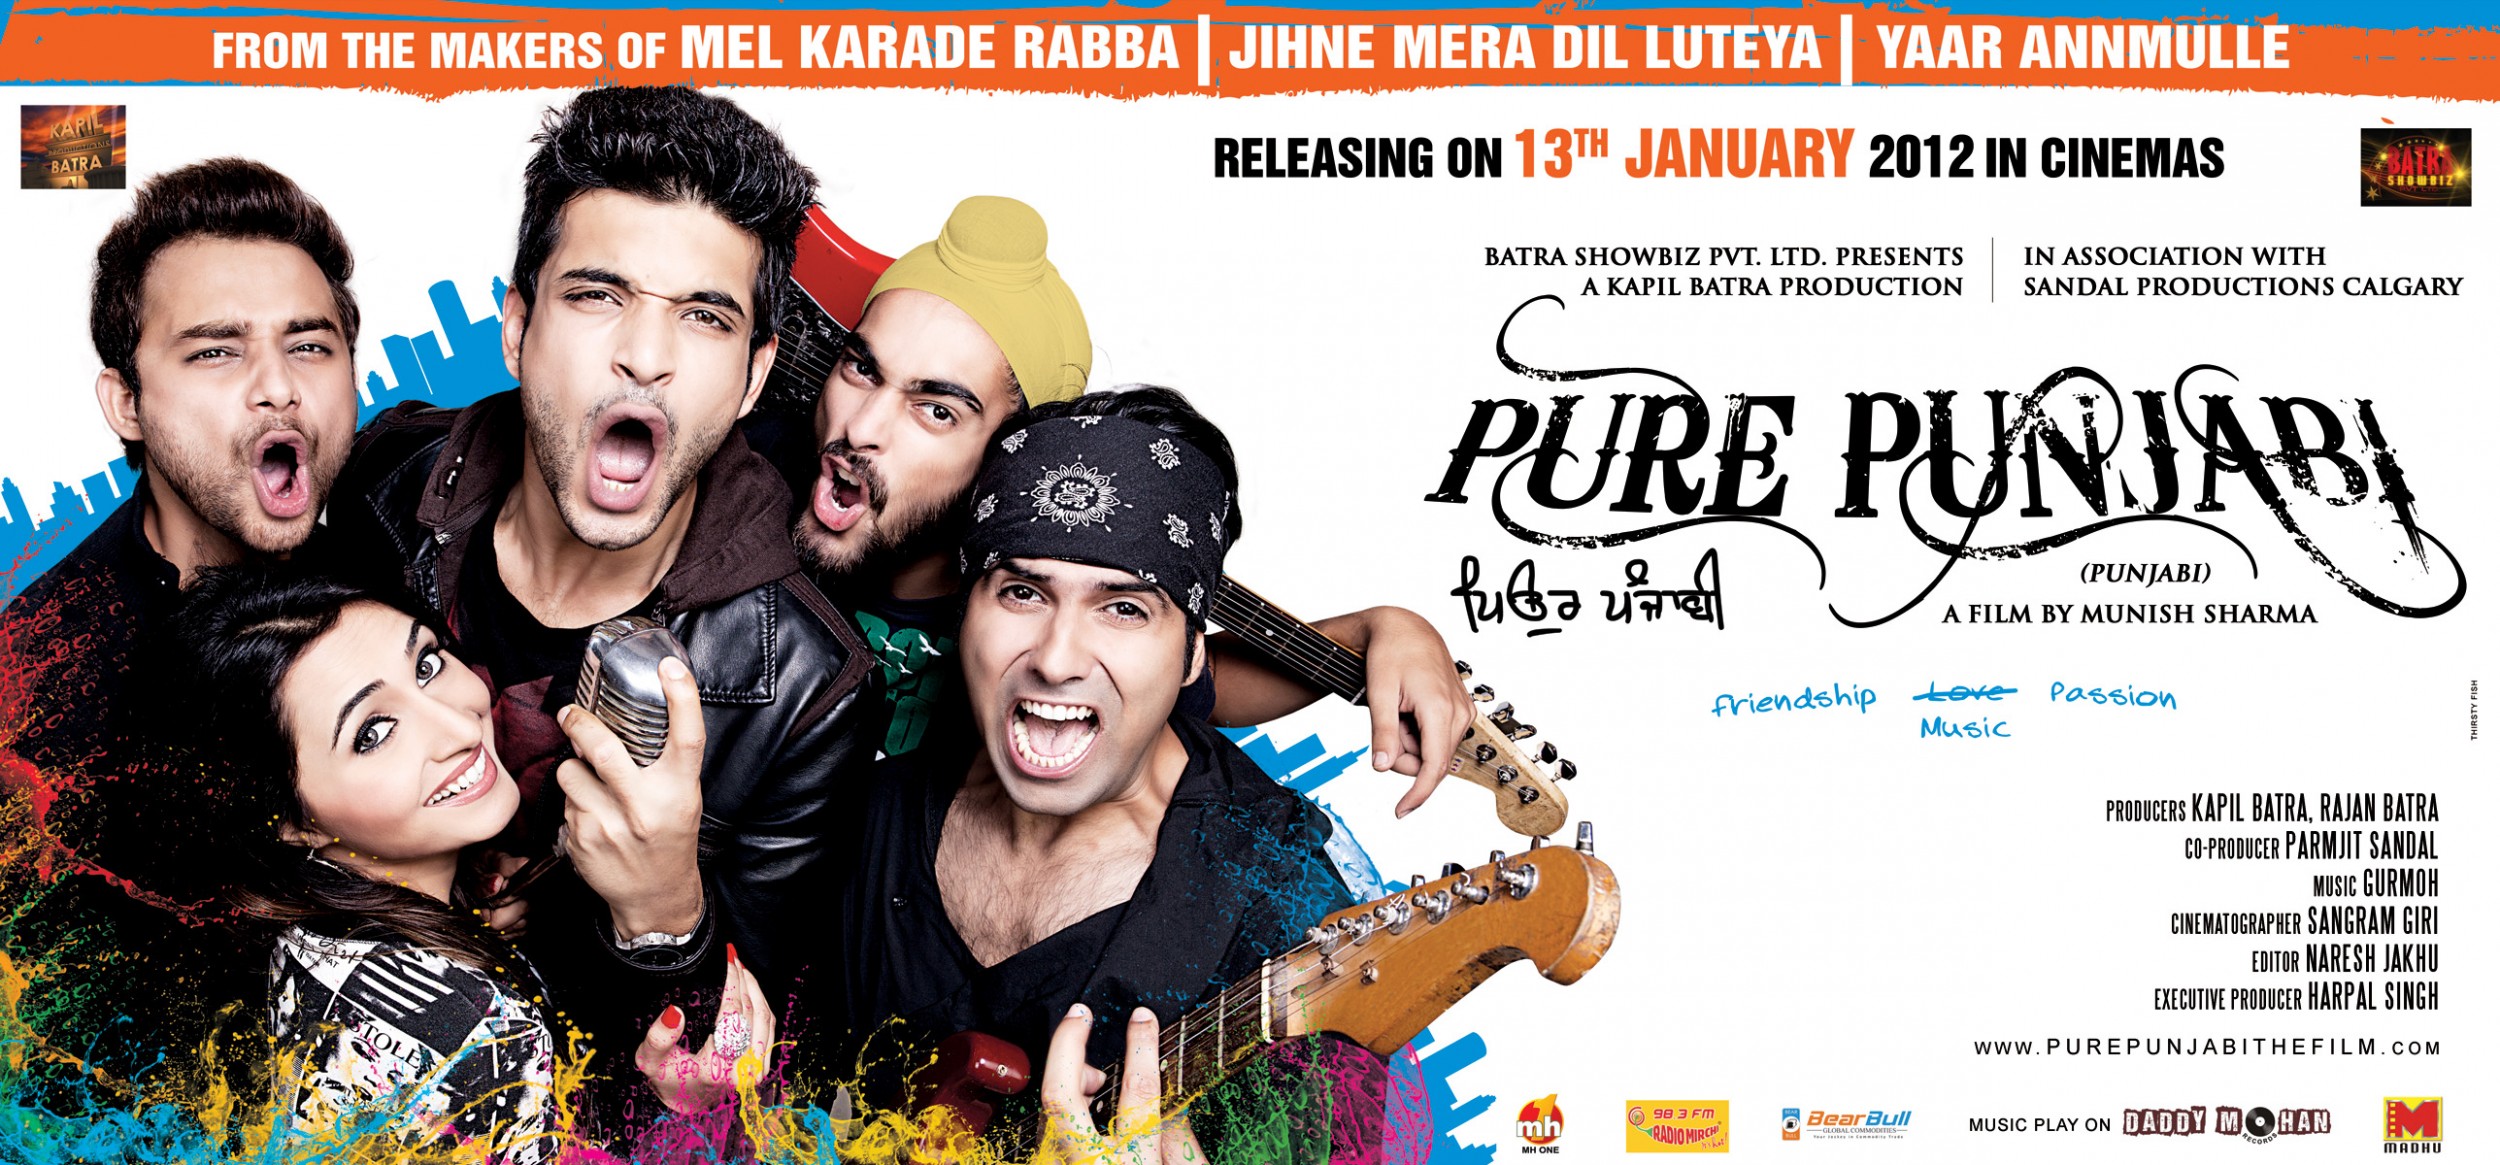 Mega Sized Movie Poster Image for Pure Punjabi (#4 of 10)